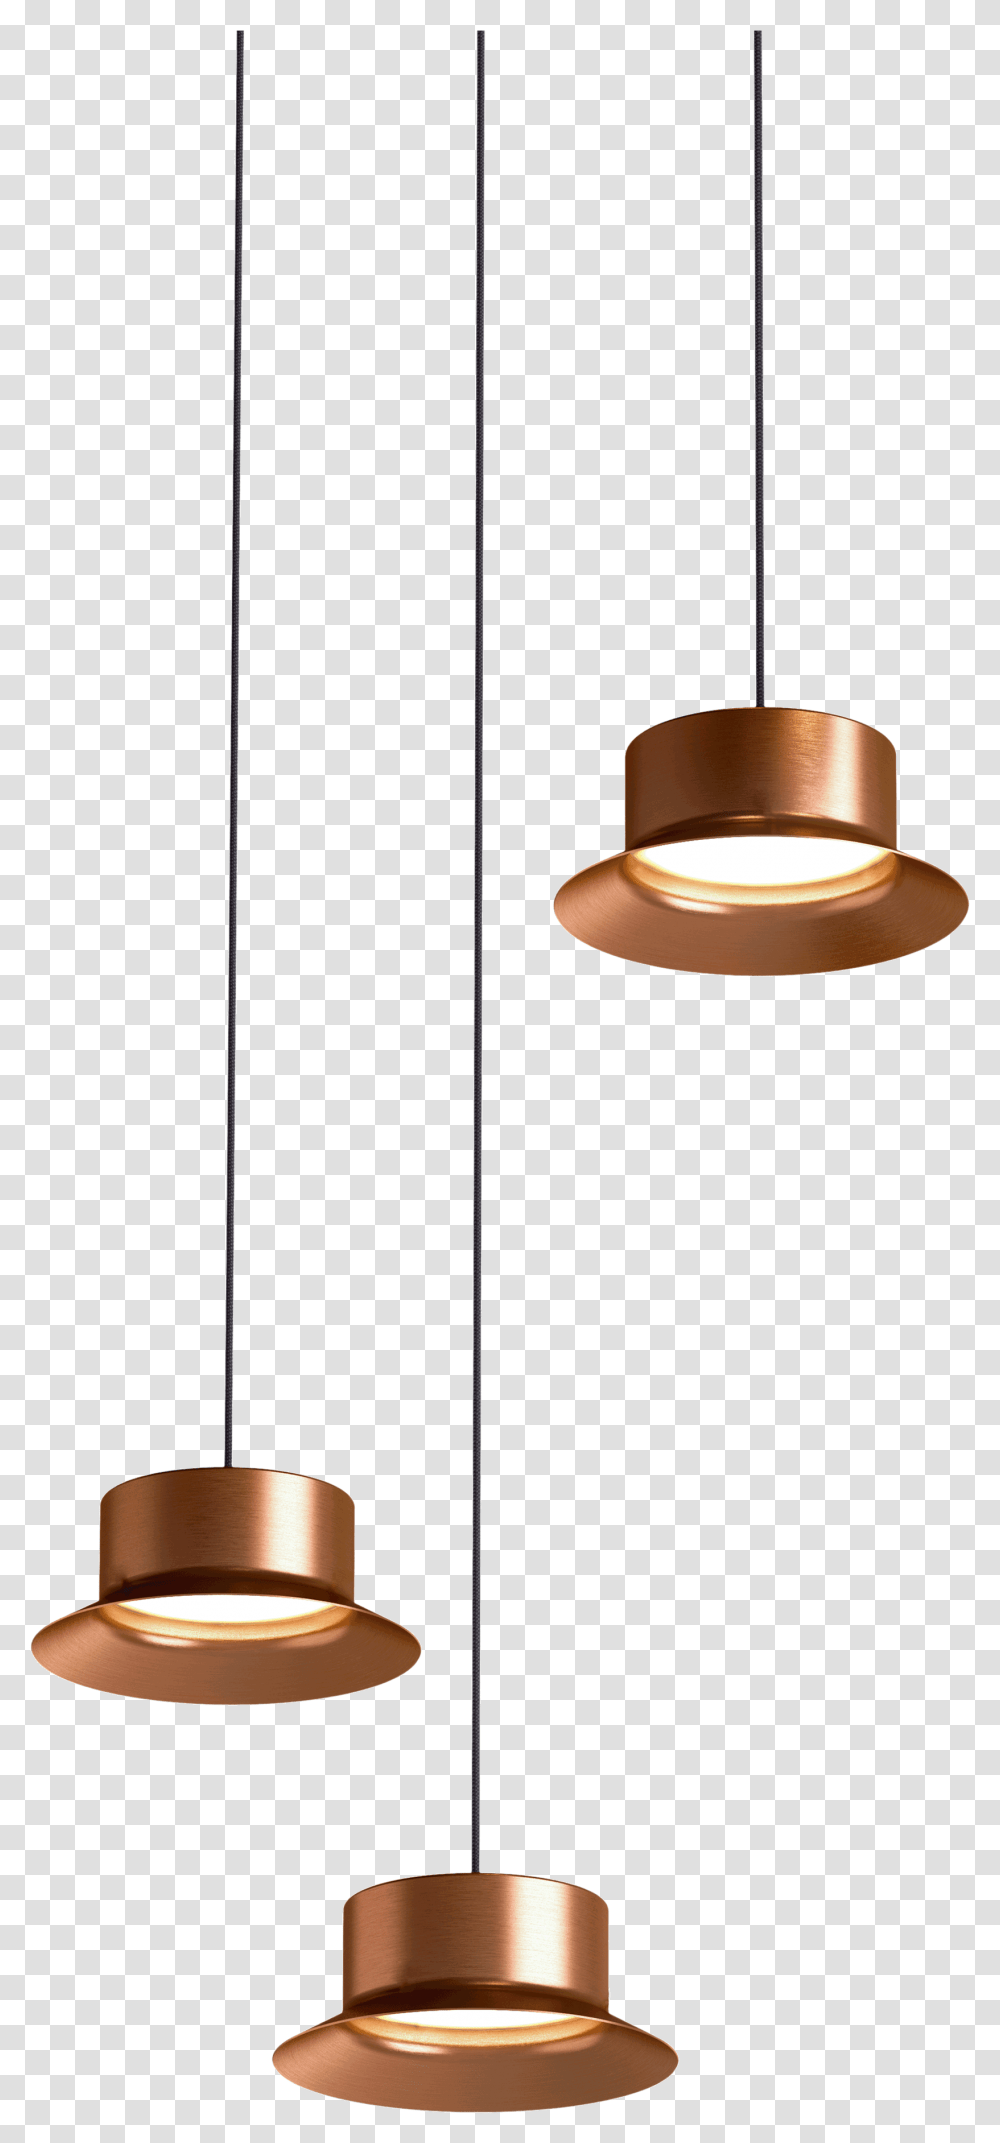 Suspended Light Fixture Image Suspended Light, Lamp, Ceiling Light, Lighting Transparent Png